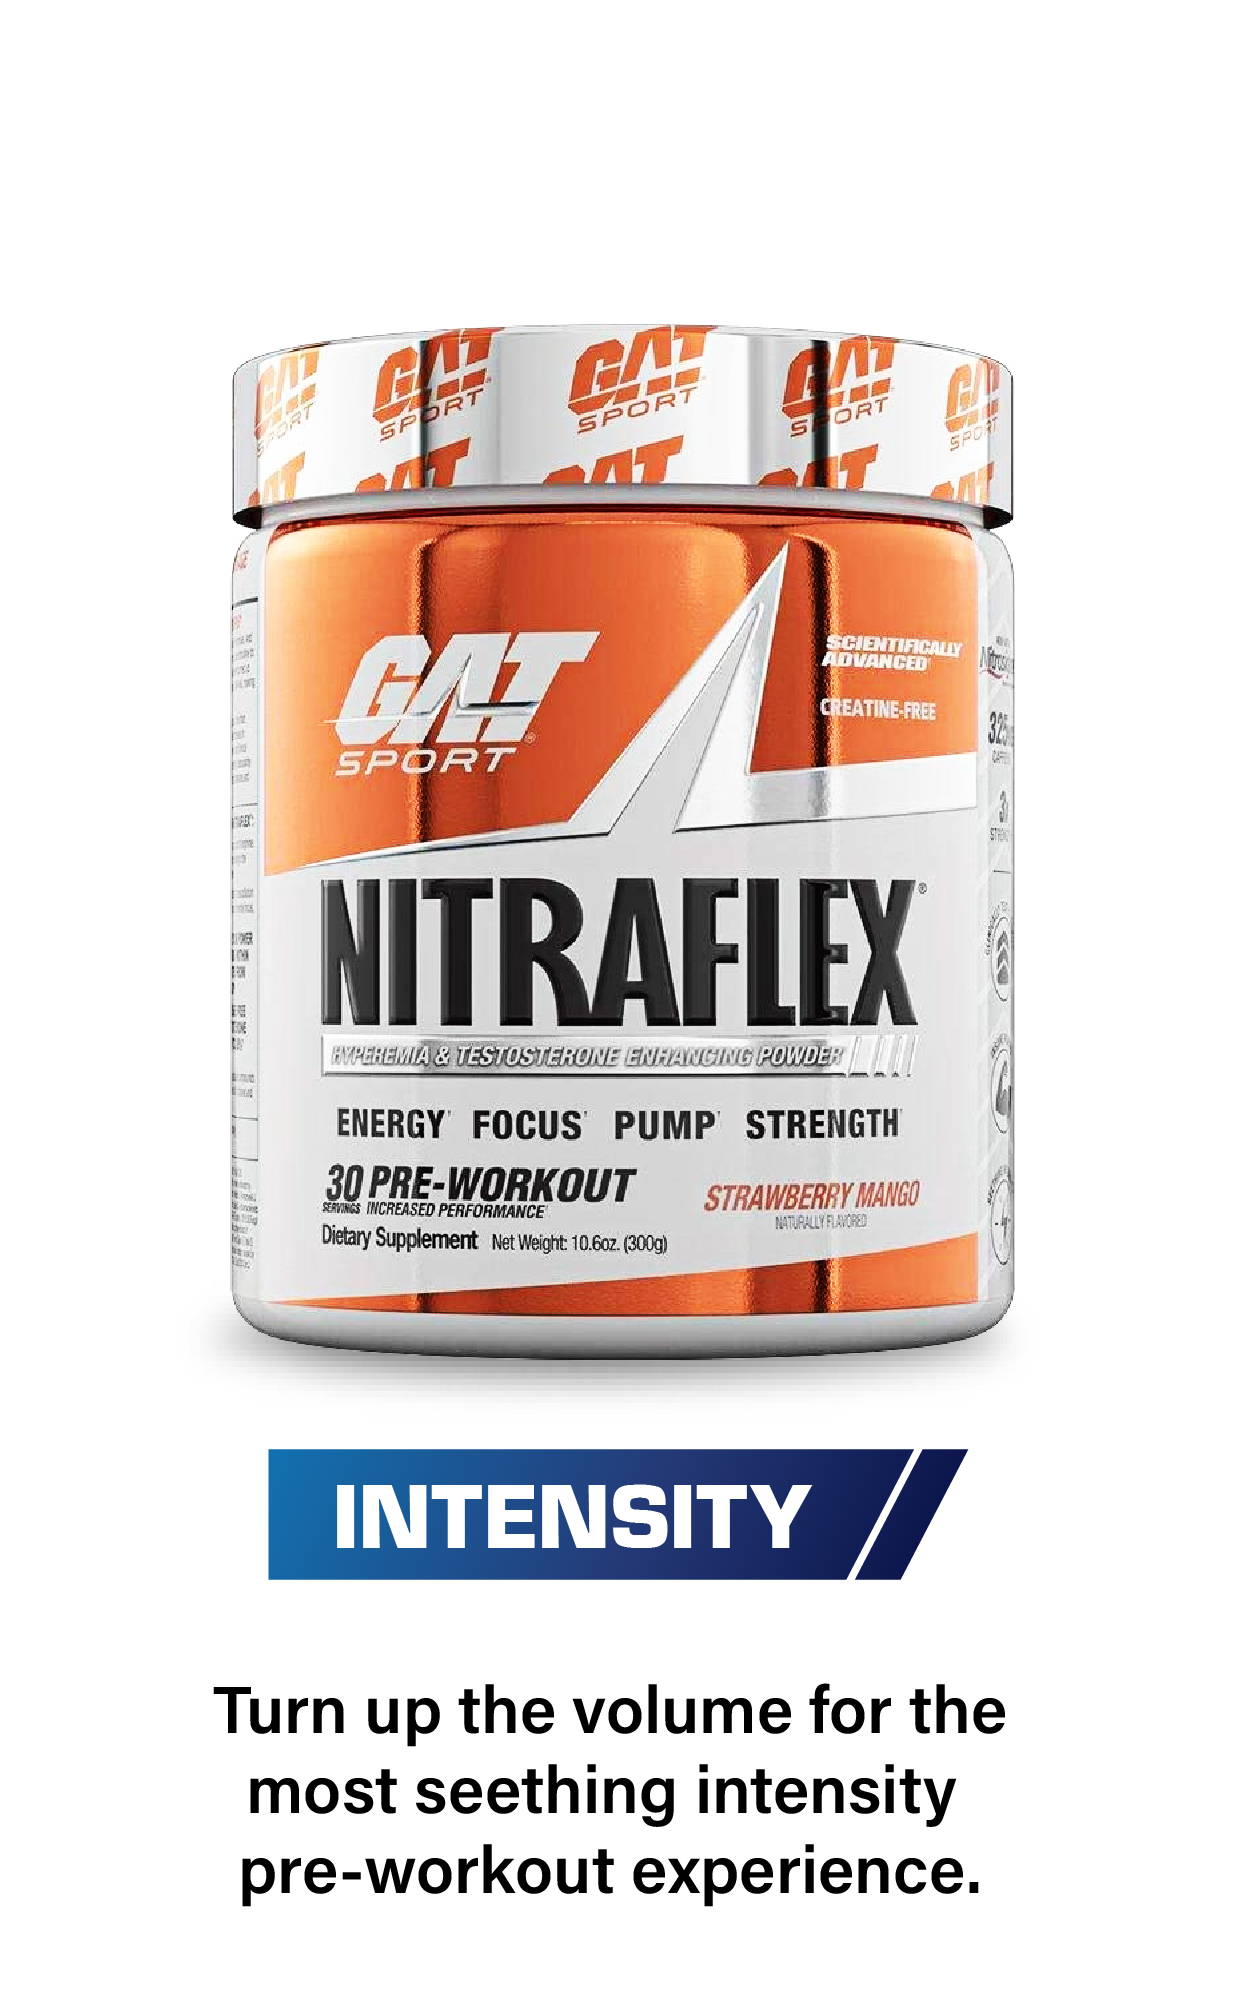 GAT Sport Ntraflex Advanced - Intensity